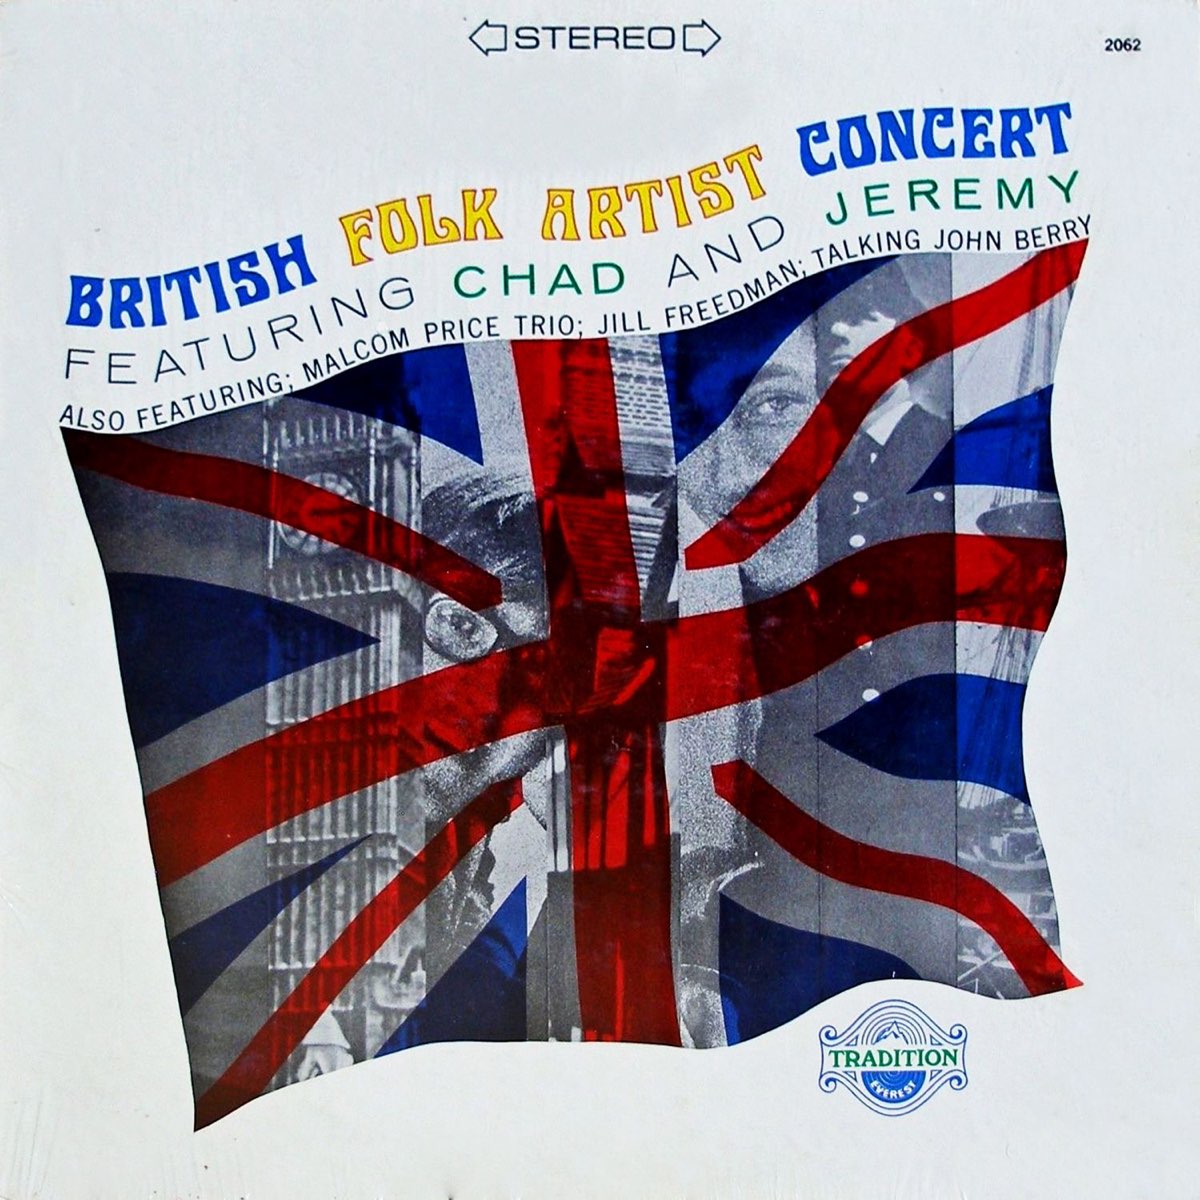 Обложка альбома с британским флагом. Бритиш альбом. Малькольм прайс. Britain listening